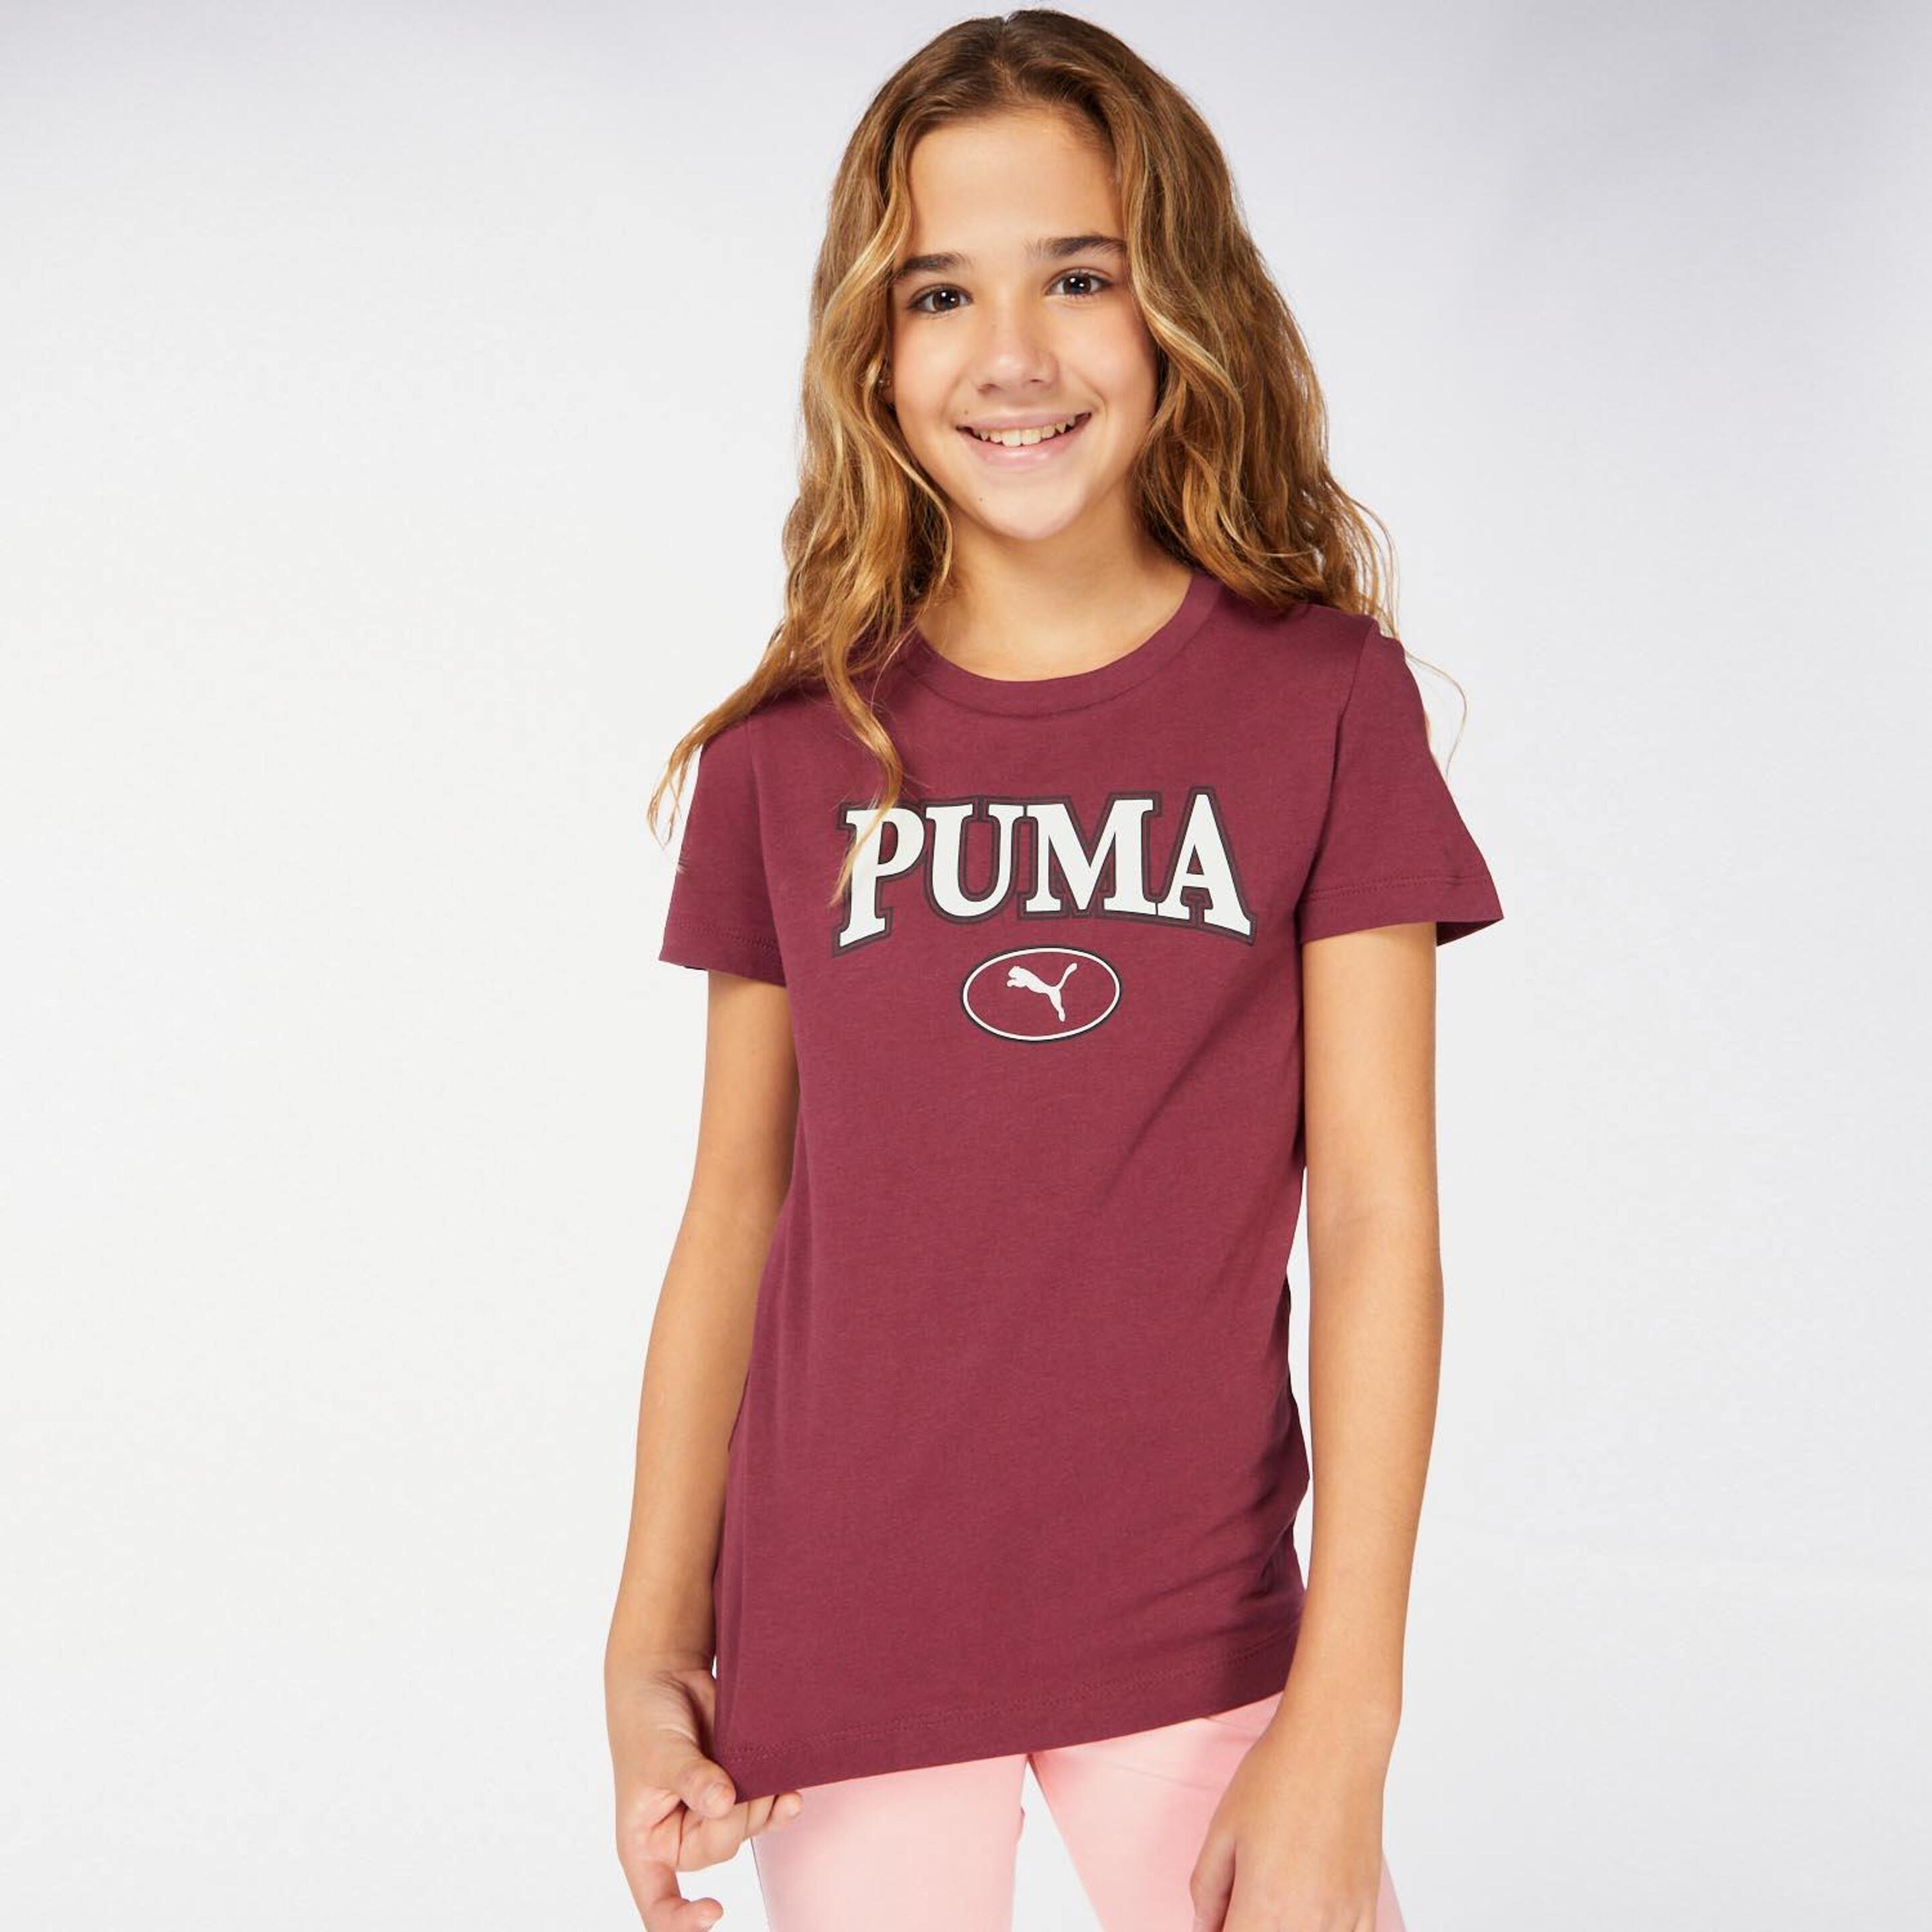 T-shirt Puma - rojo - T-shirt Rapariga